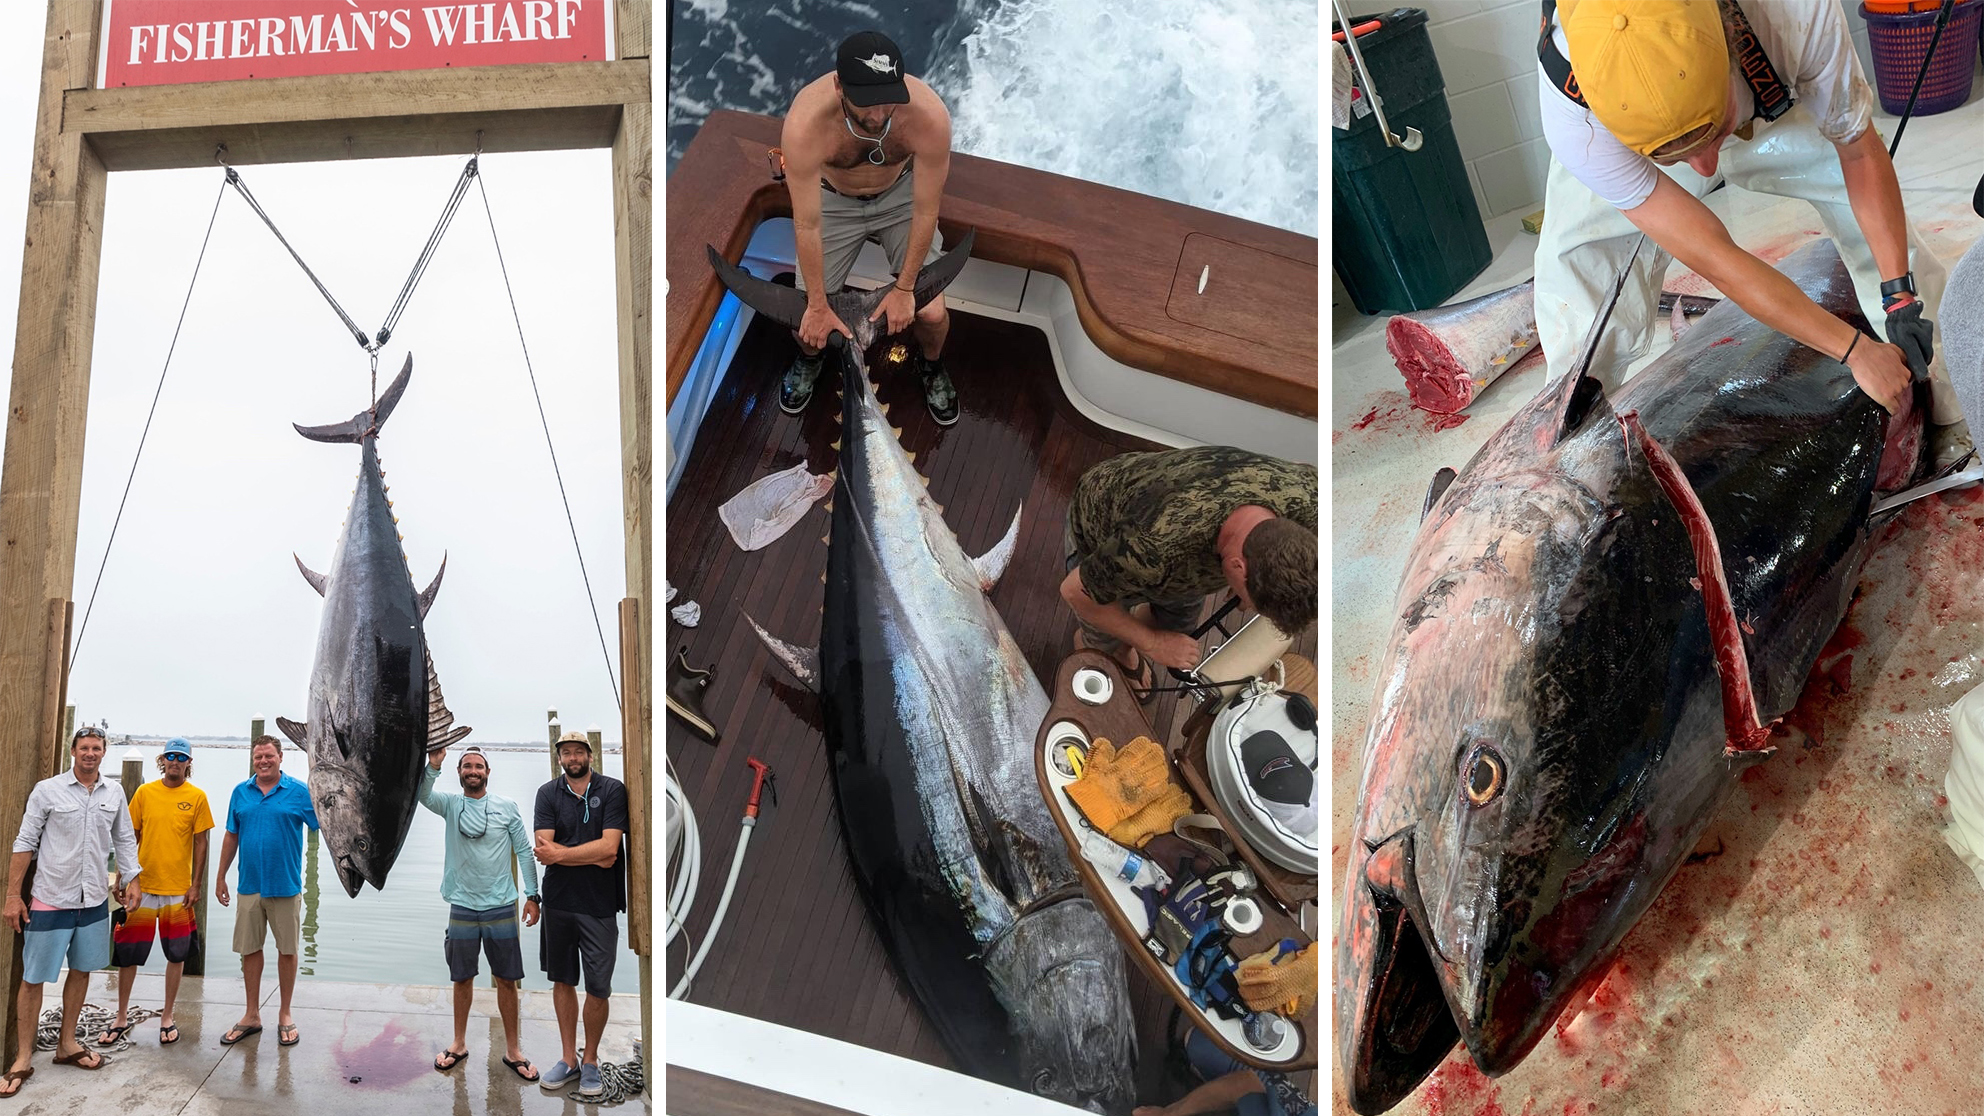 world record bluefin tuna price